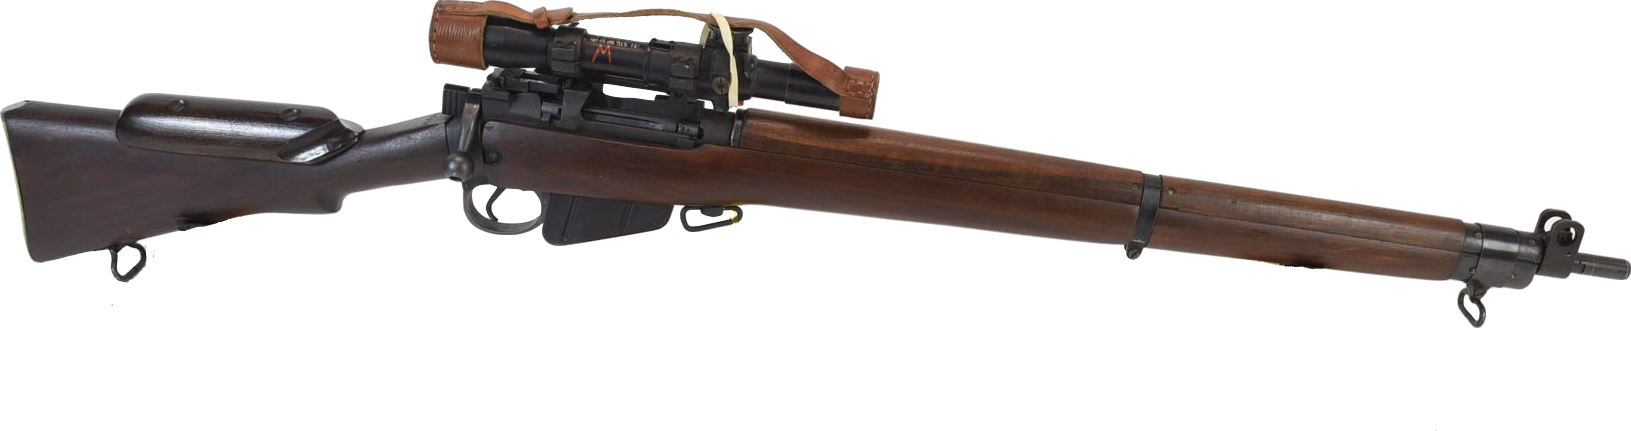 Lee Enfield Model No. 4 Mk. 1 (T) Sniper Rifle